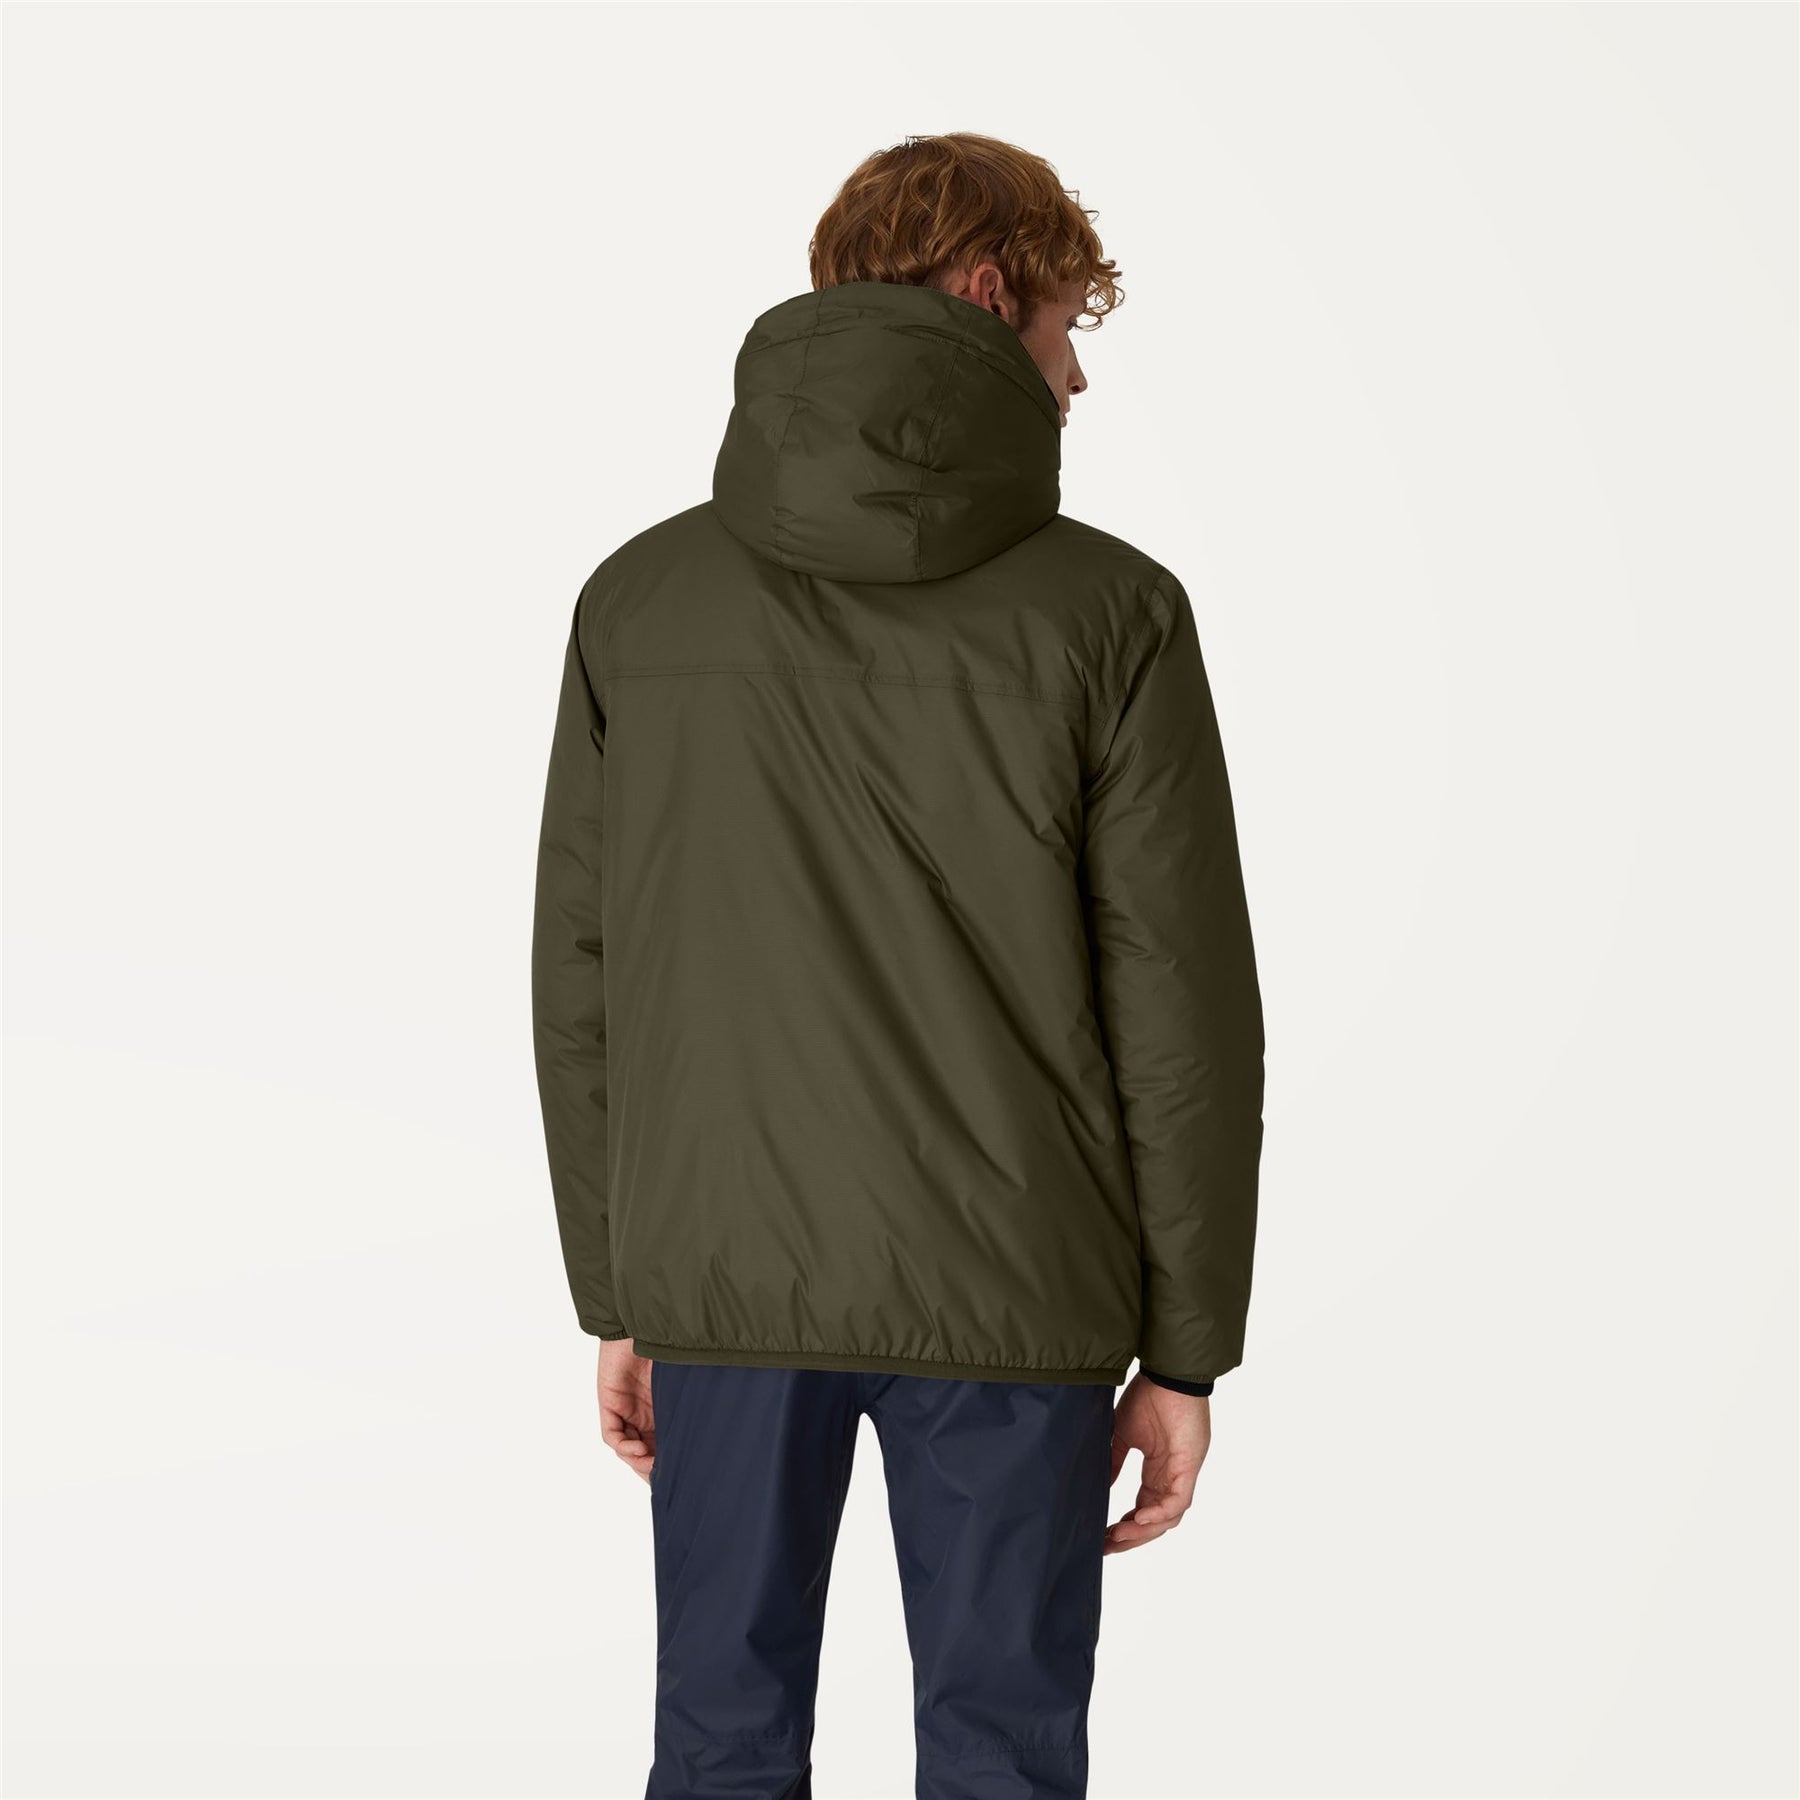 Claude Orsetto - Unisex Lined Full Zip Rain Jacket in Green Blackish